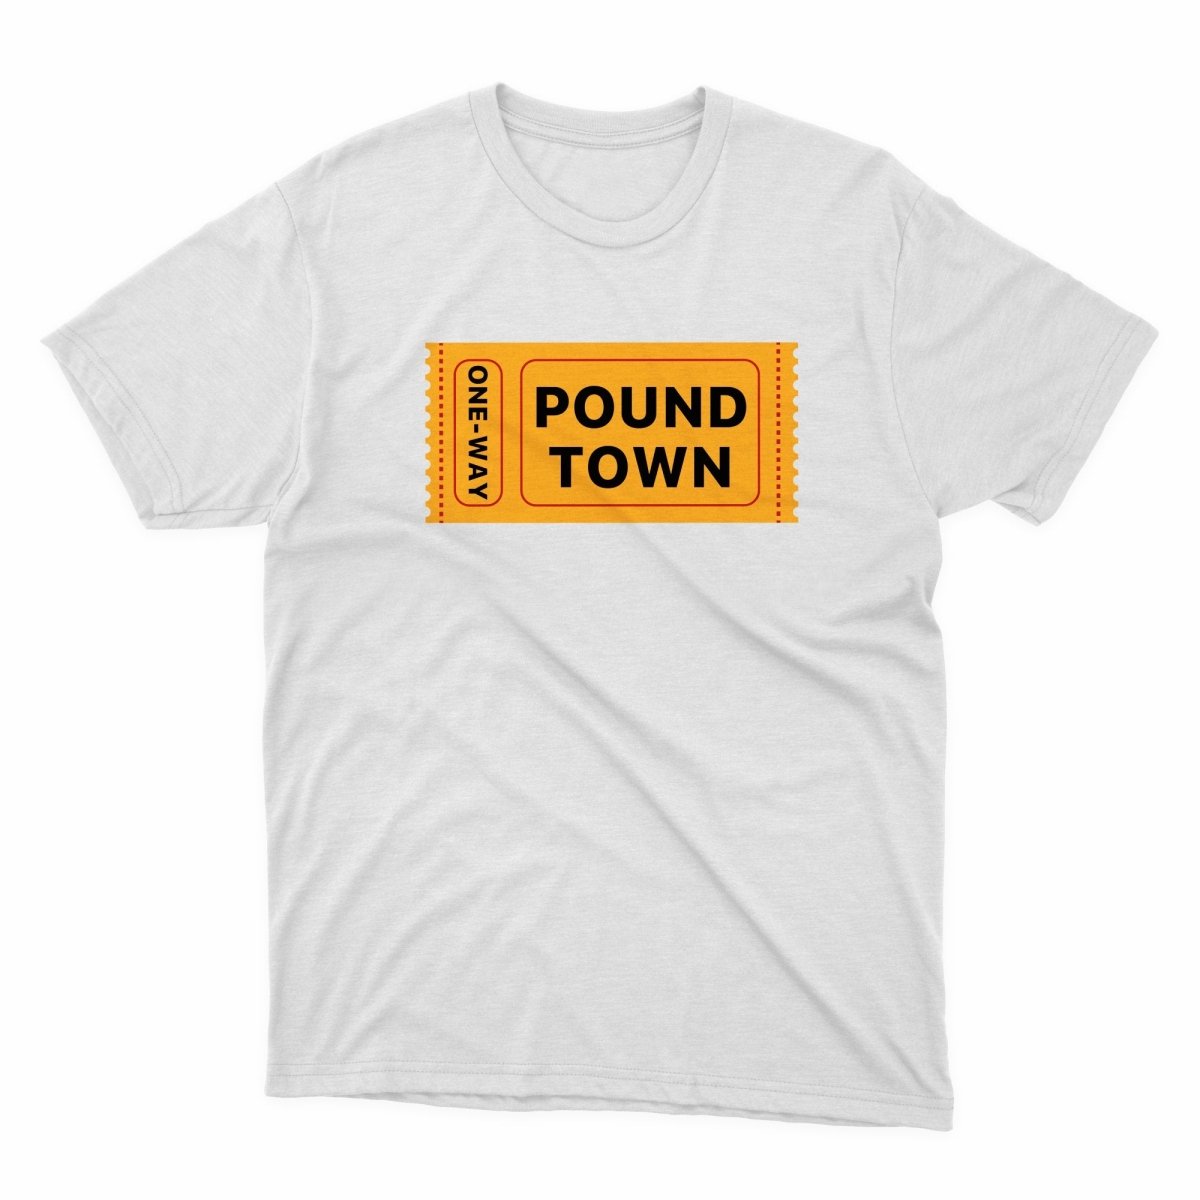 One Way Ticket To Pound Town Shirt - stickerbullOne Way Ticket To Pound Town ShirtShirtsPrintifystickerbull31533150272364852939WhiteSa white t - shirt with the words pound town on it